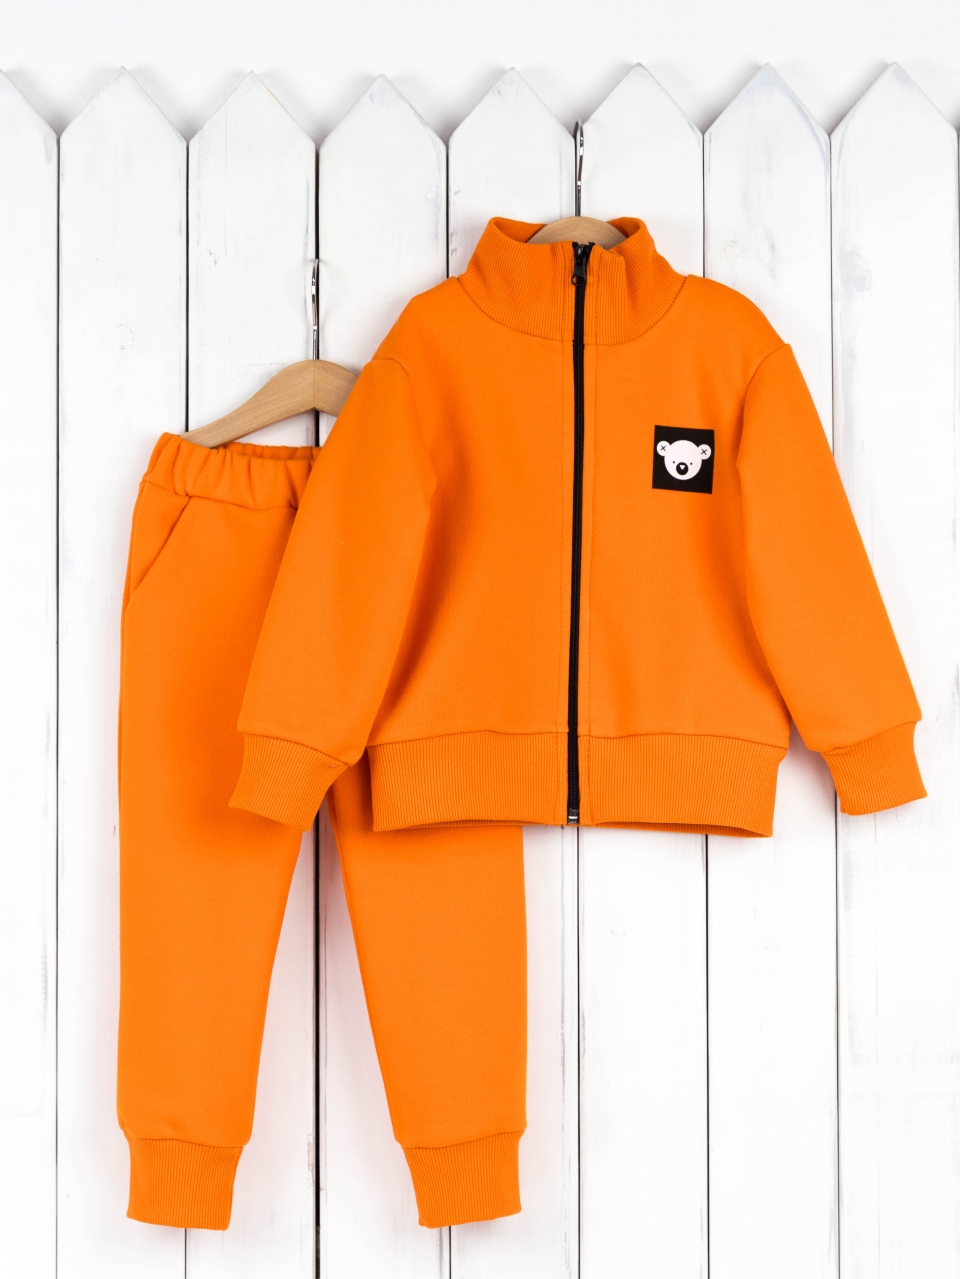 КД475/1-Ф Комплект детский р. 98 (футер 3-х нитка петля/куртка+брюки/апельсин) Бэби бум - Оренбург 